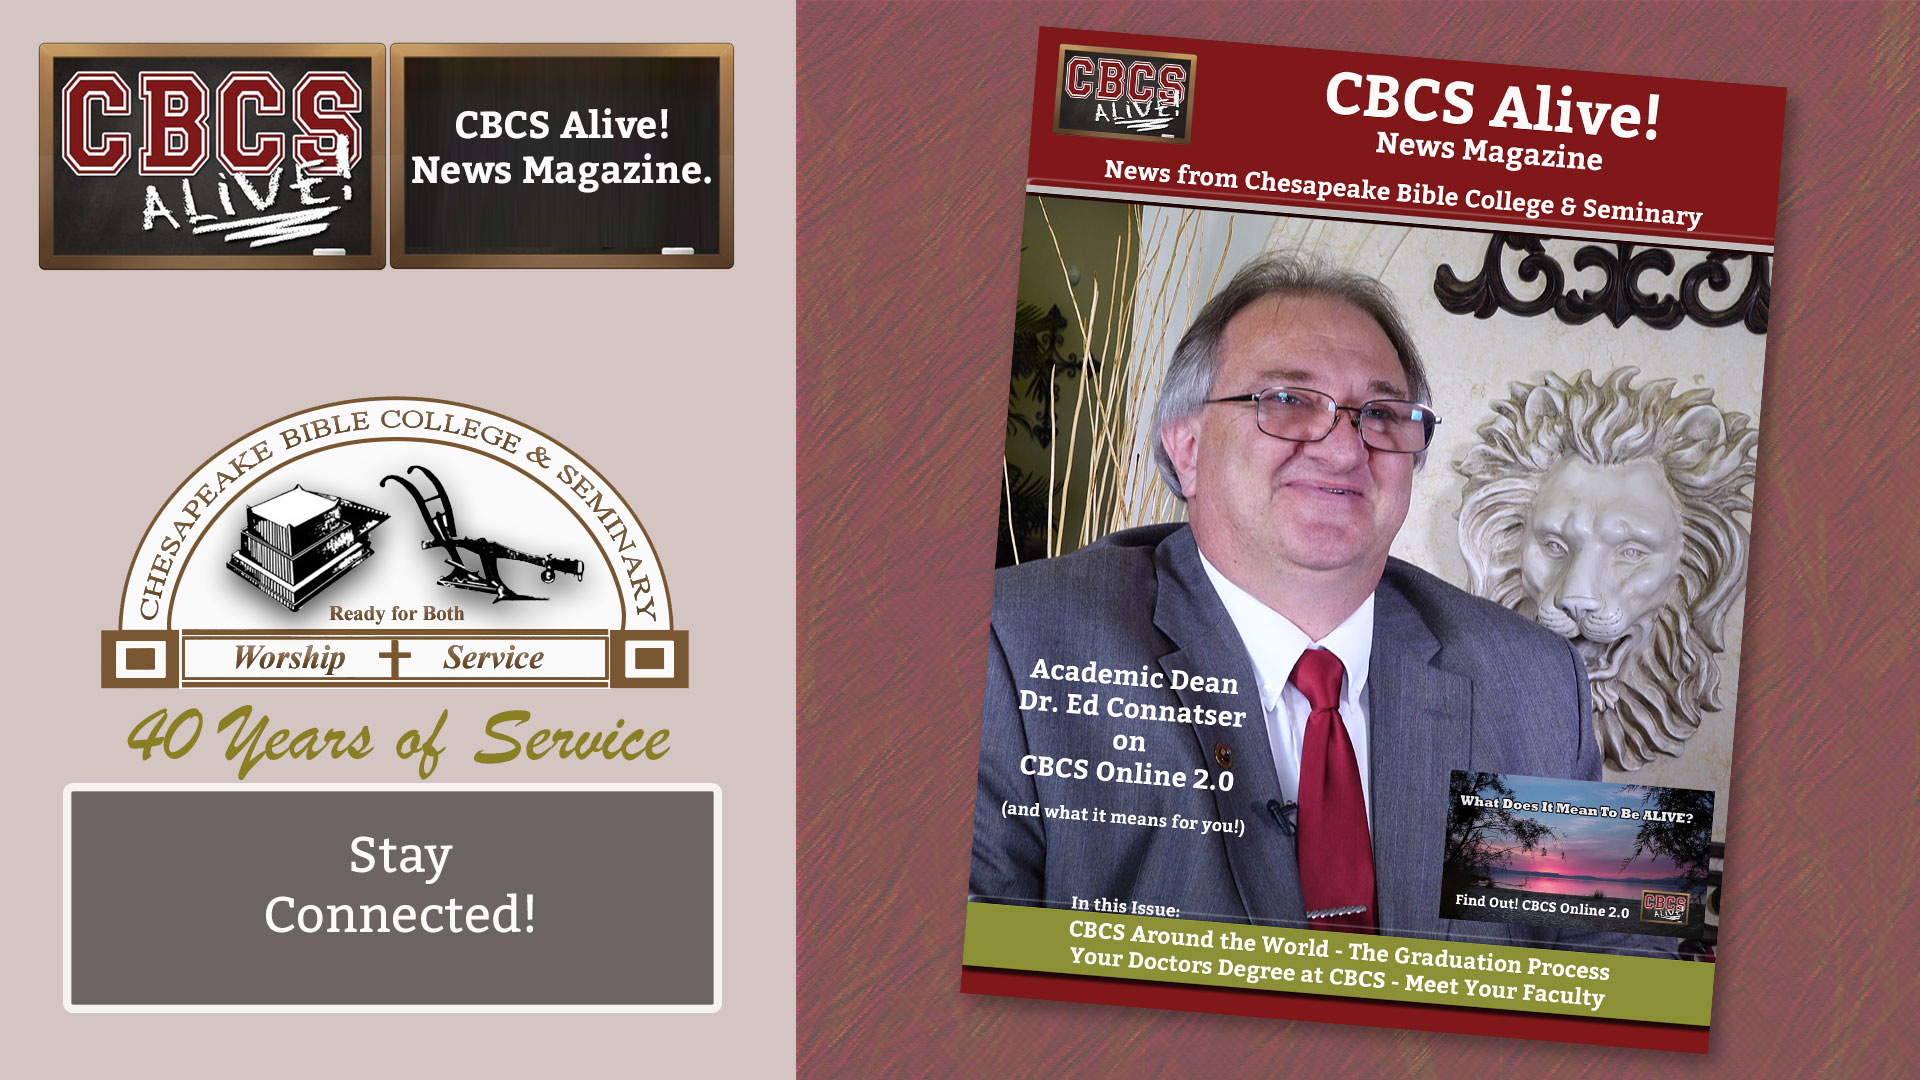 CBCS Alive! News Magazine